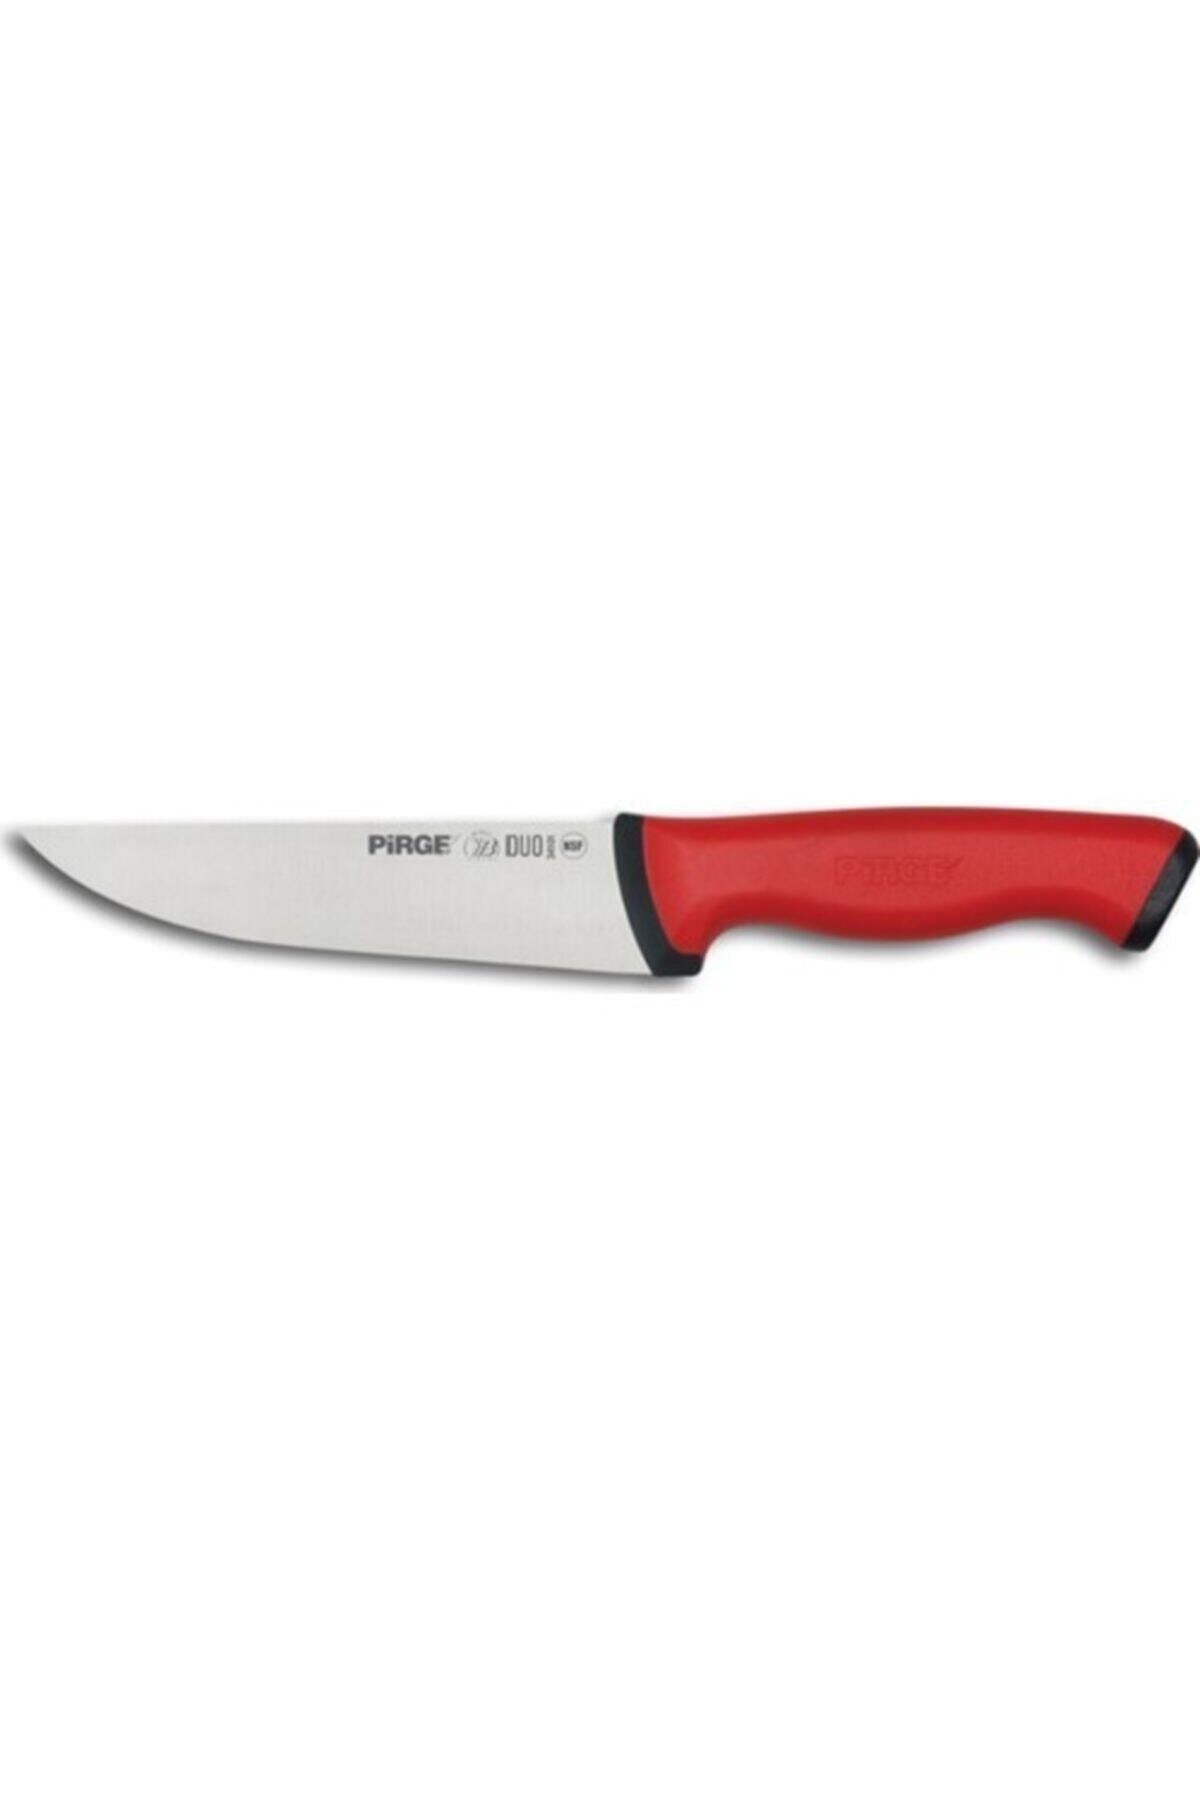 Pirge 34101 Duo Kasap Bıçağı No.1 14,5 Cm 34101